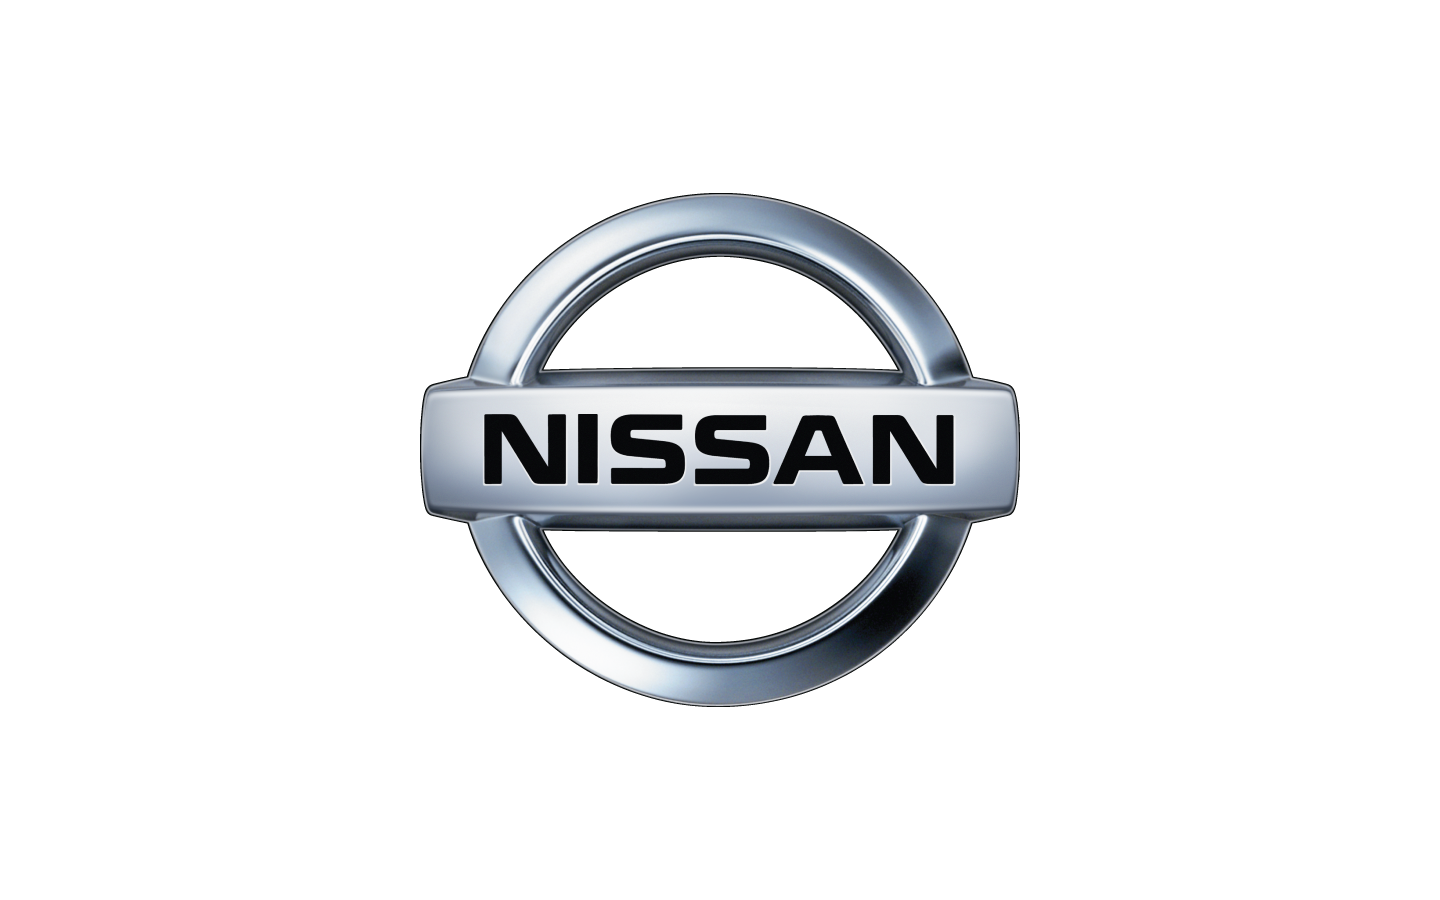 Nissan Text Logo 1920x1080 (H